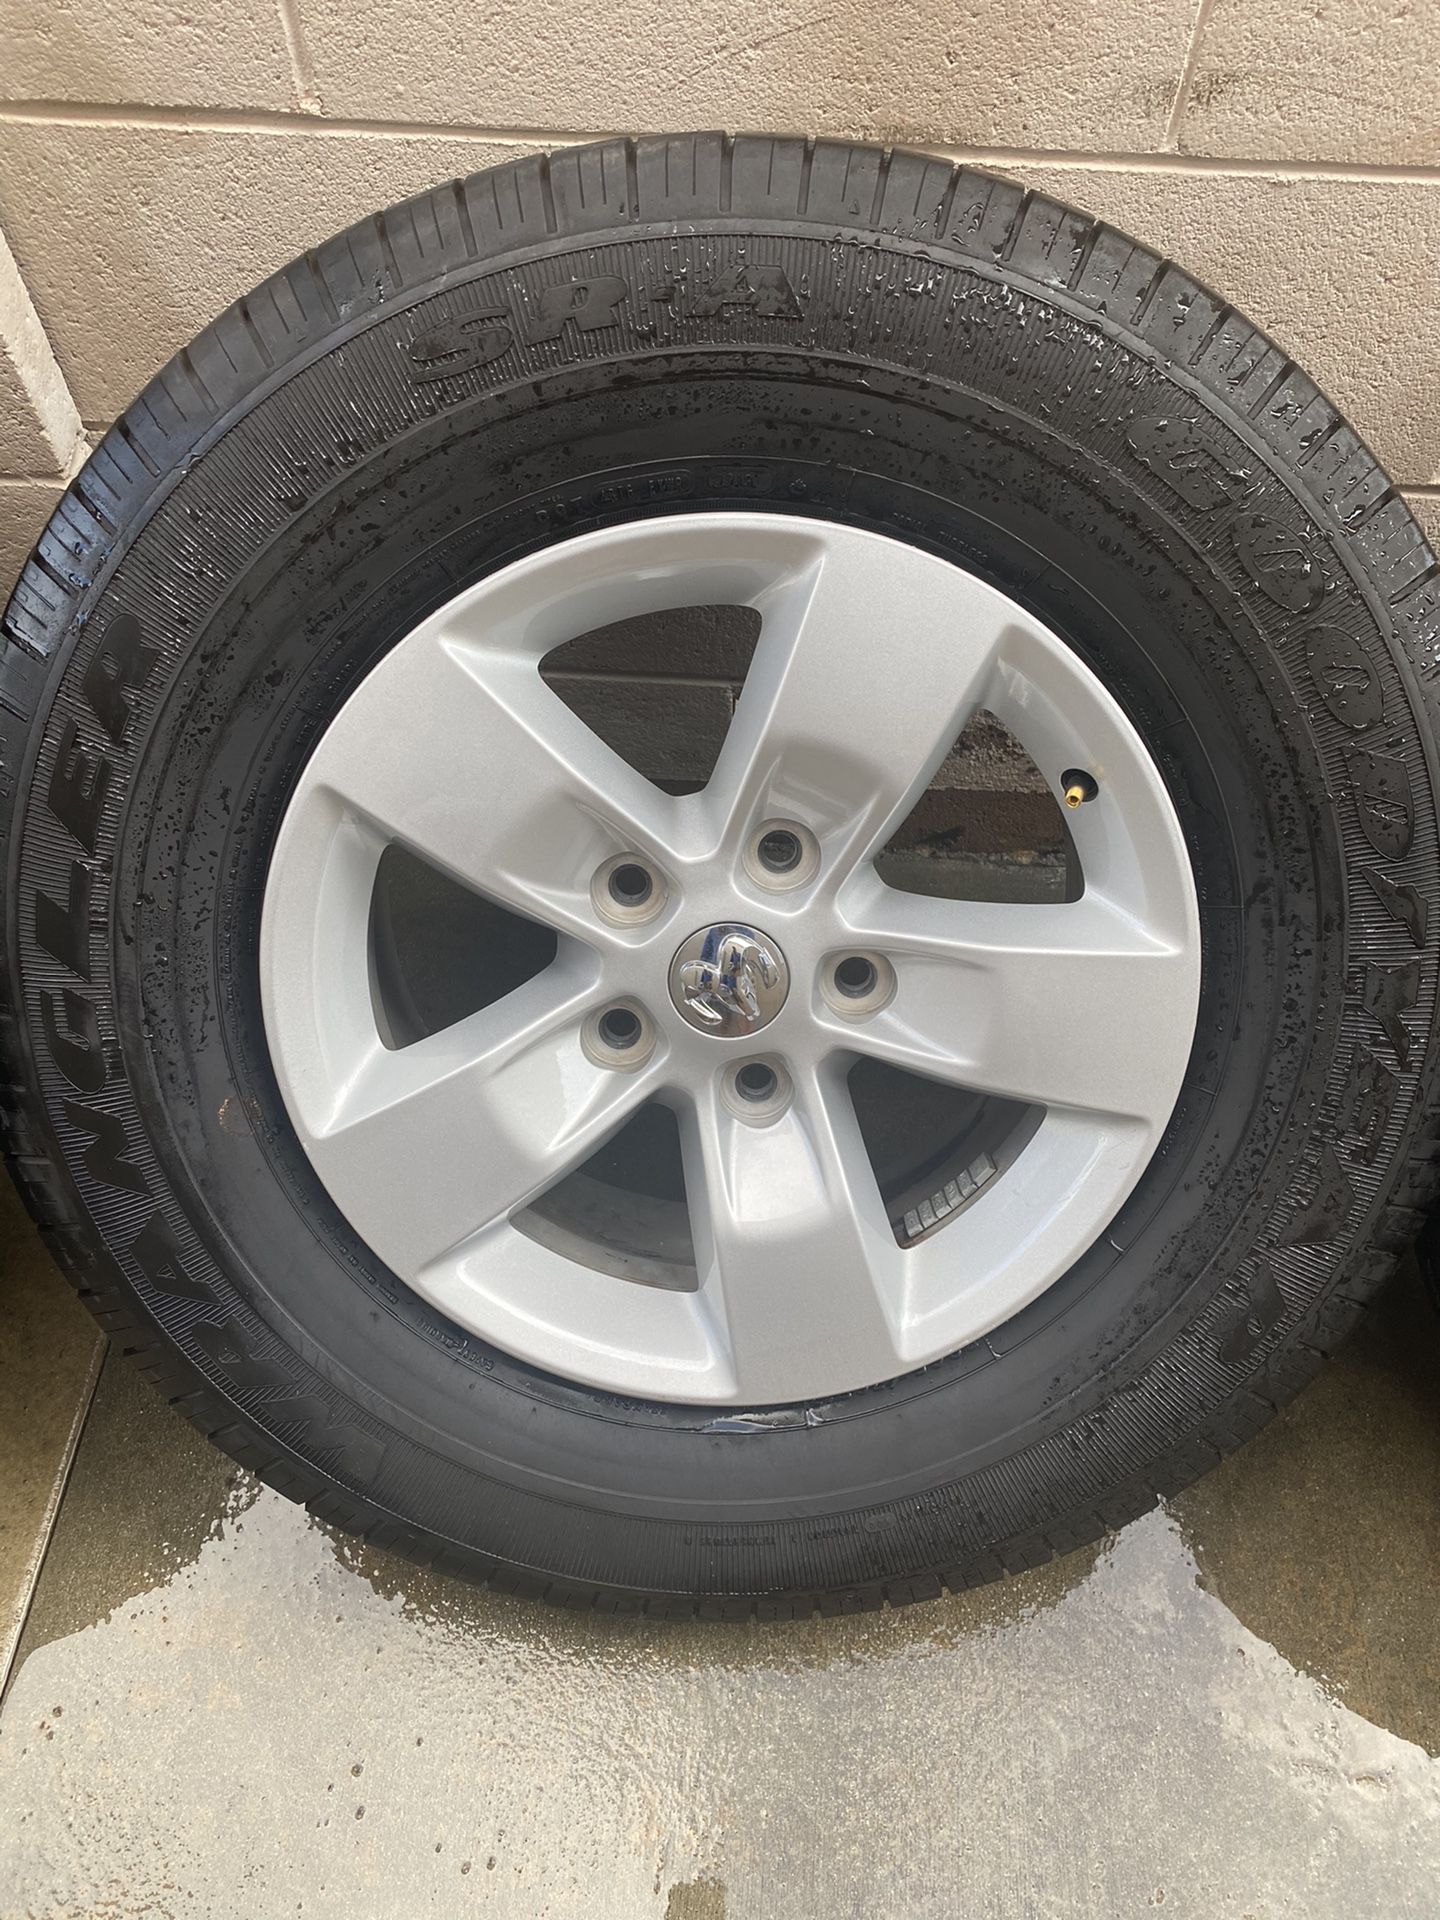 Wrangler 265/70/R17 tires and wheels. 2019 10,000 mi